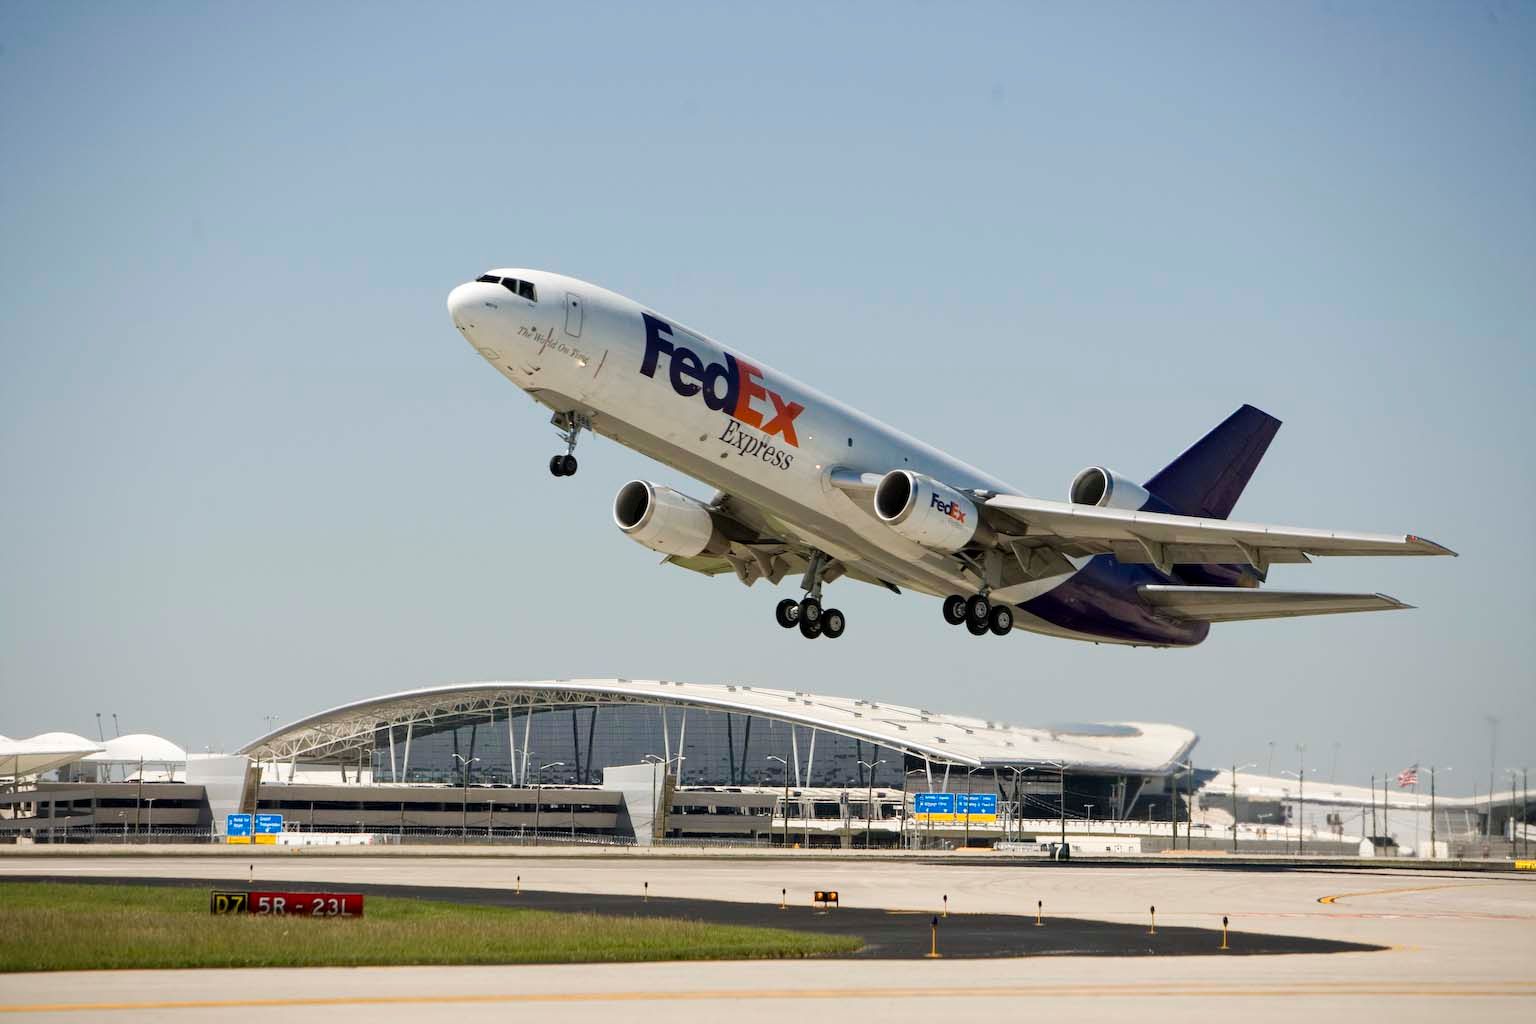 A FedEx Express plane at IND